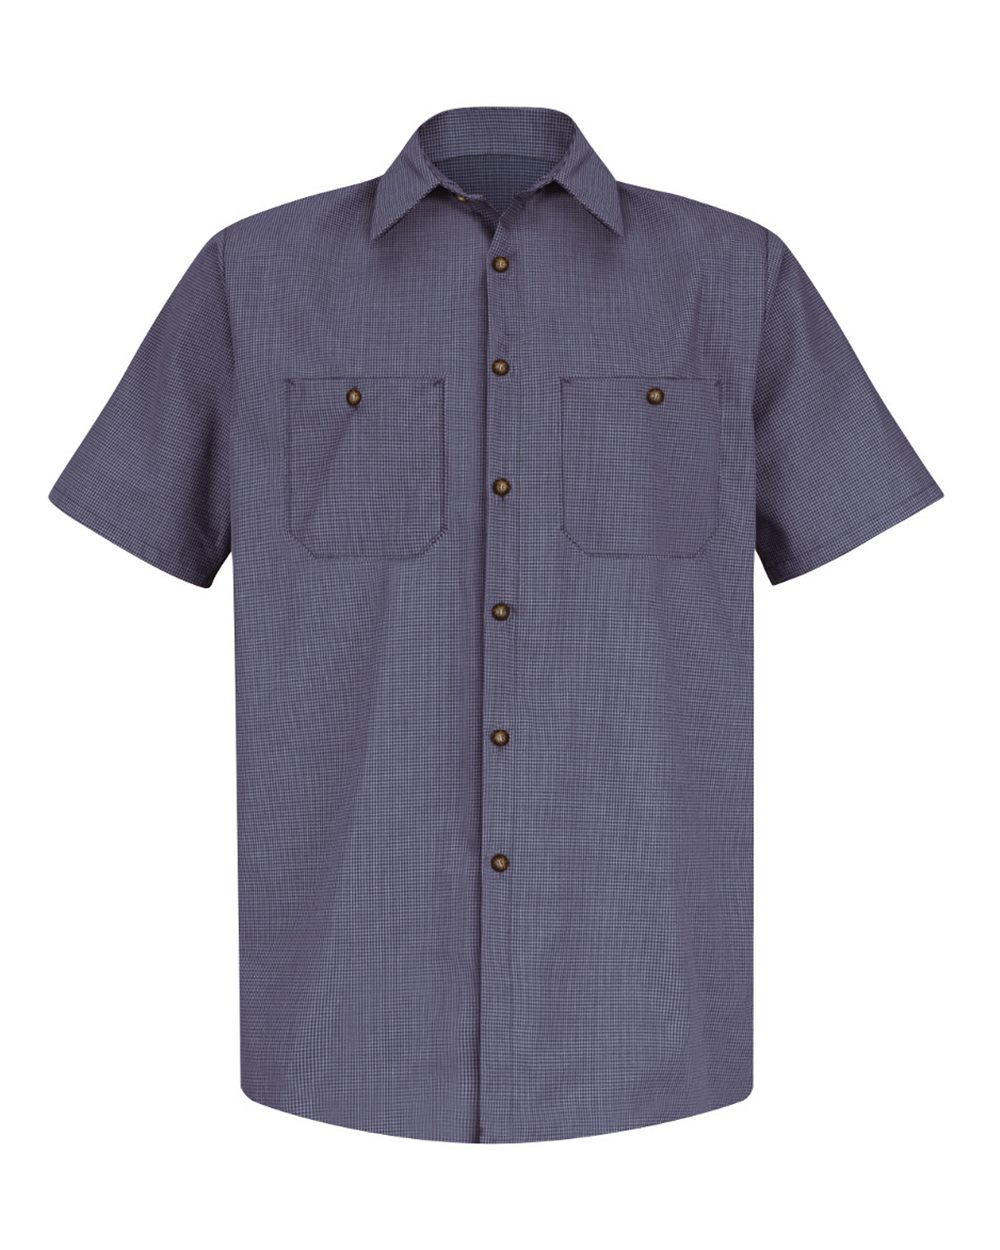 Red Kap Industrial SP20 Micro Check or Stripe Short Sleeve Work Shirt